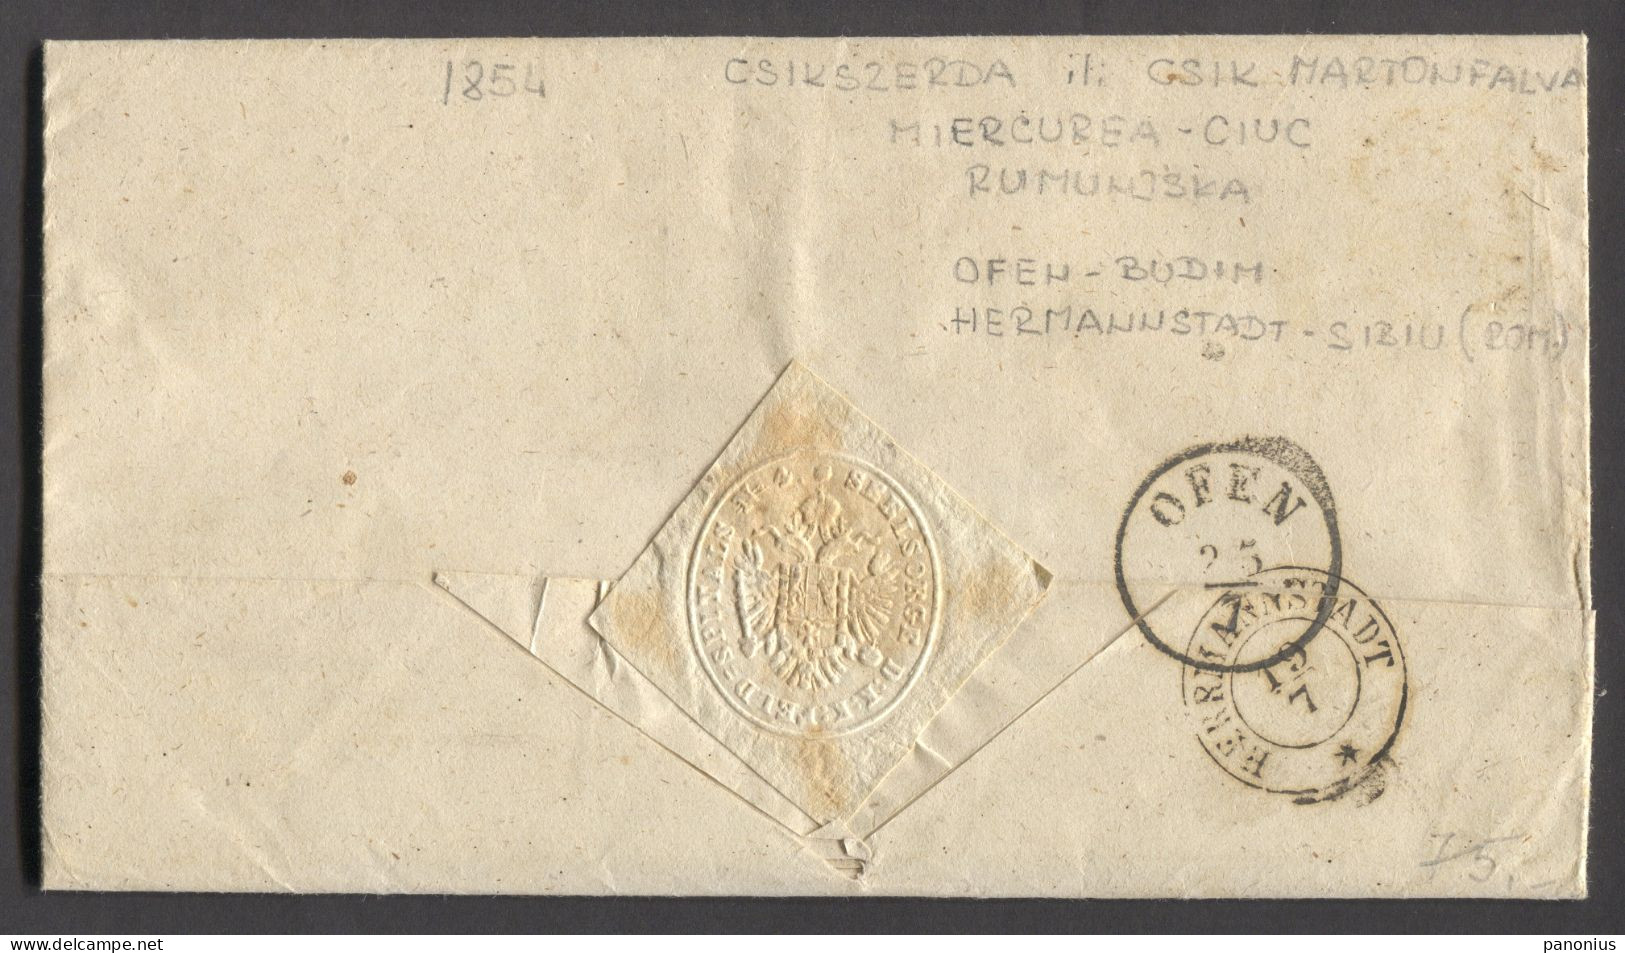 Romania - Csik Martonfalva / Csik Szereda, Prephilately Cover Feld Spital Year 1854. For Budim, Transit Seal Hermannstad - ...-1858 Prephilately